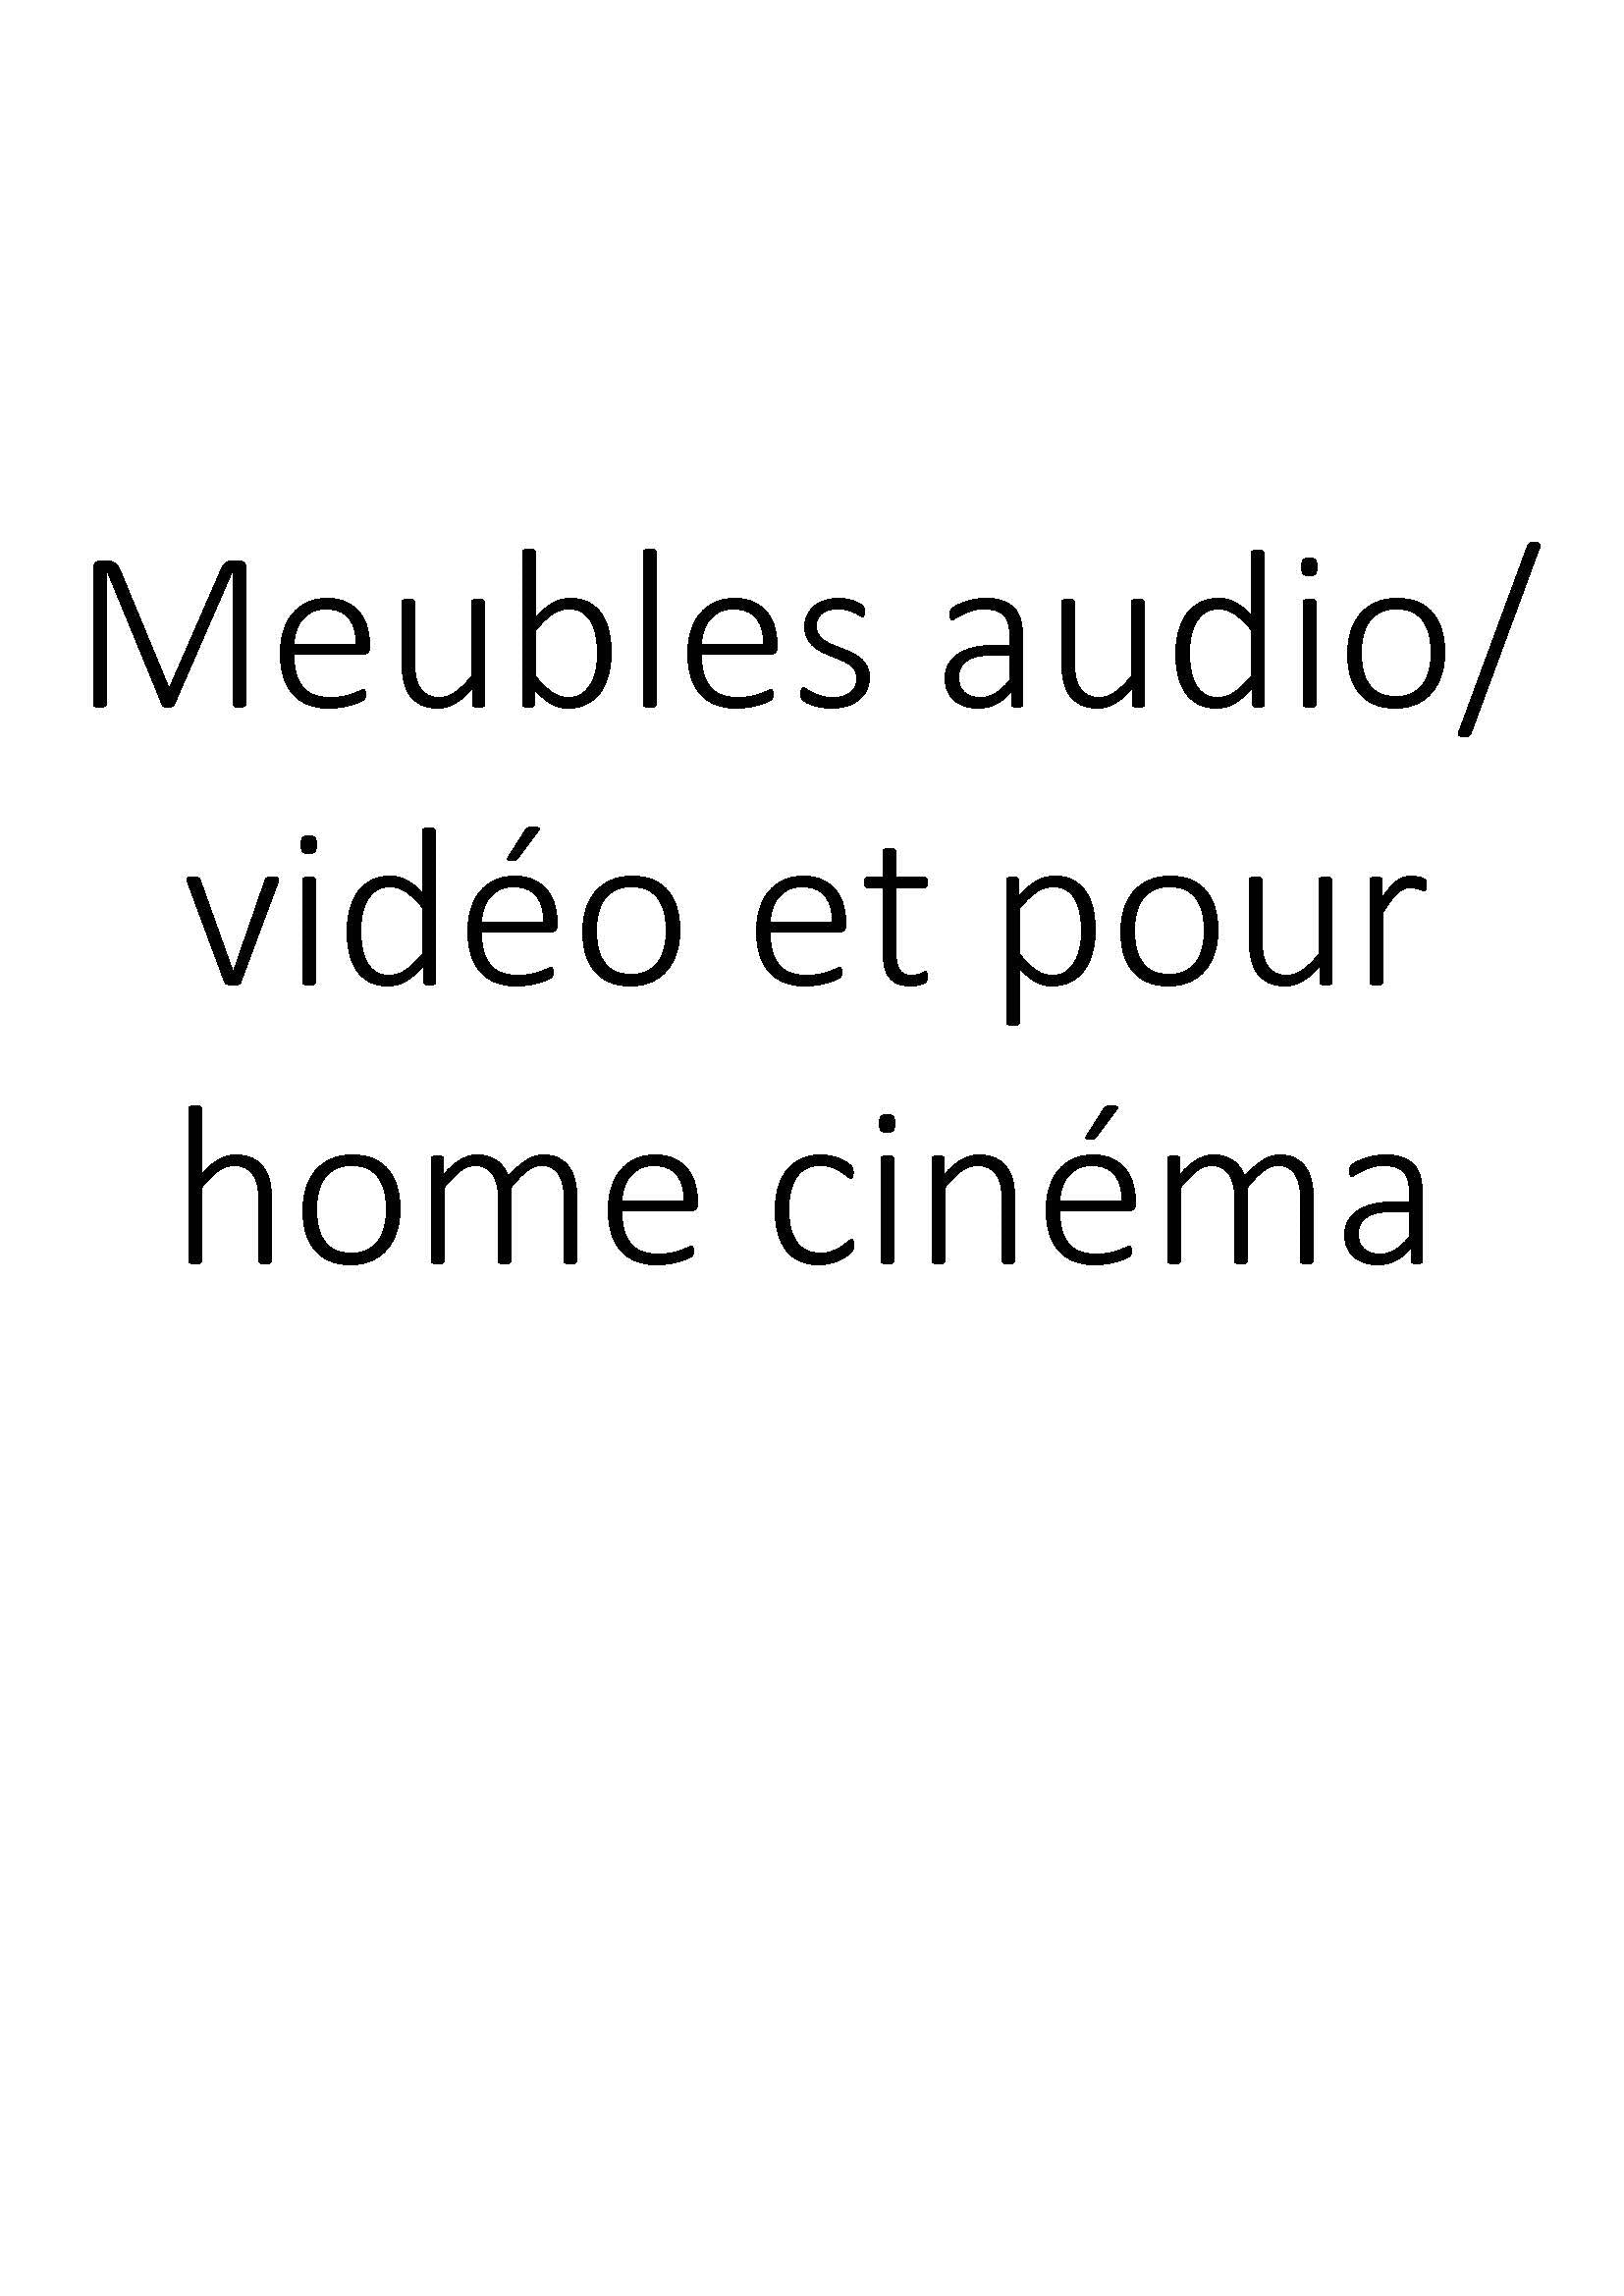 Meubles audio/vidéo et pour home cinéma clicktofournisseur.com